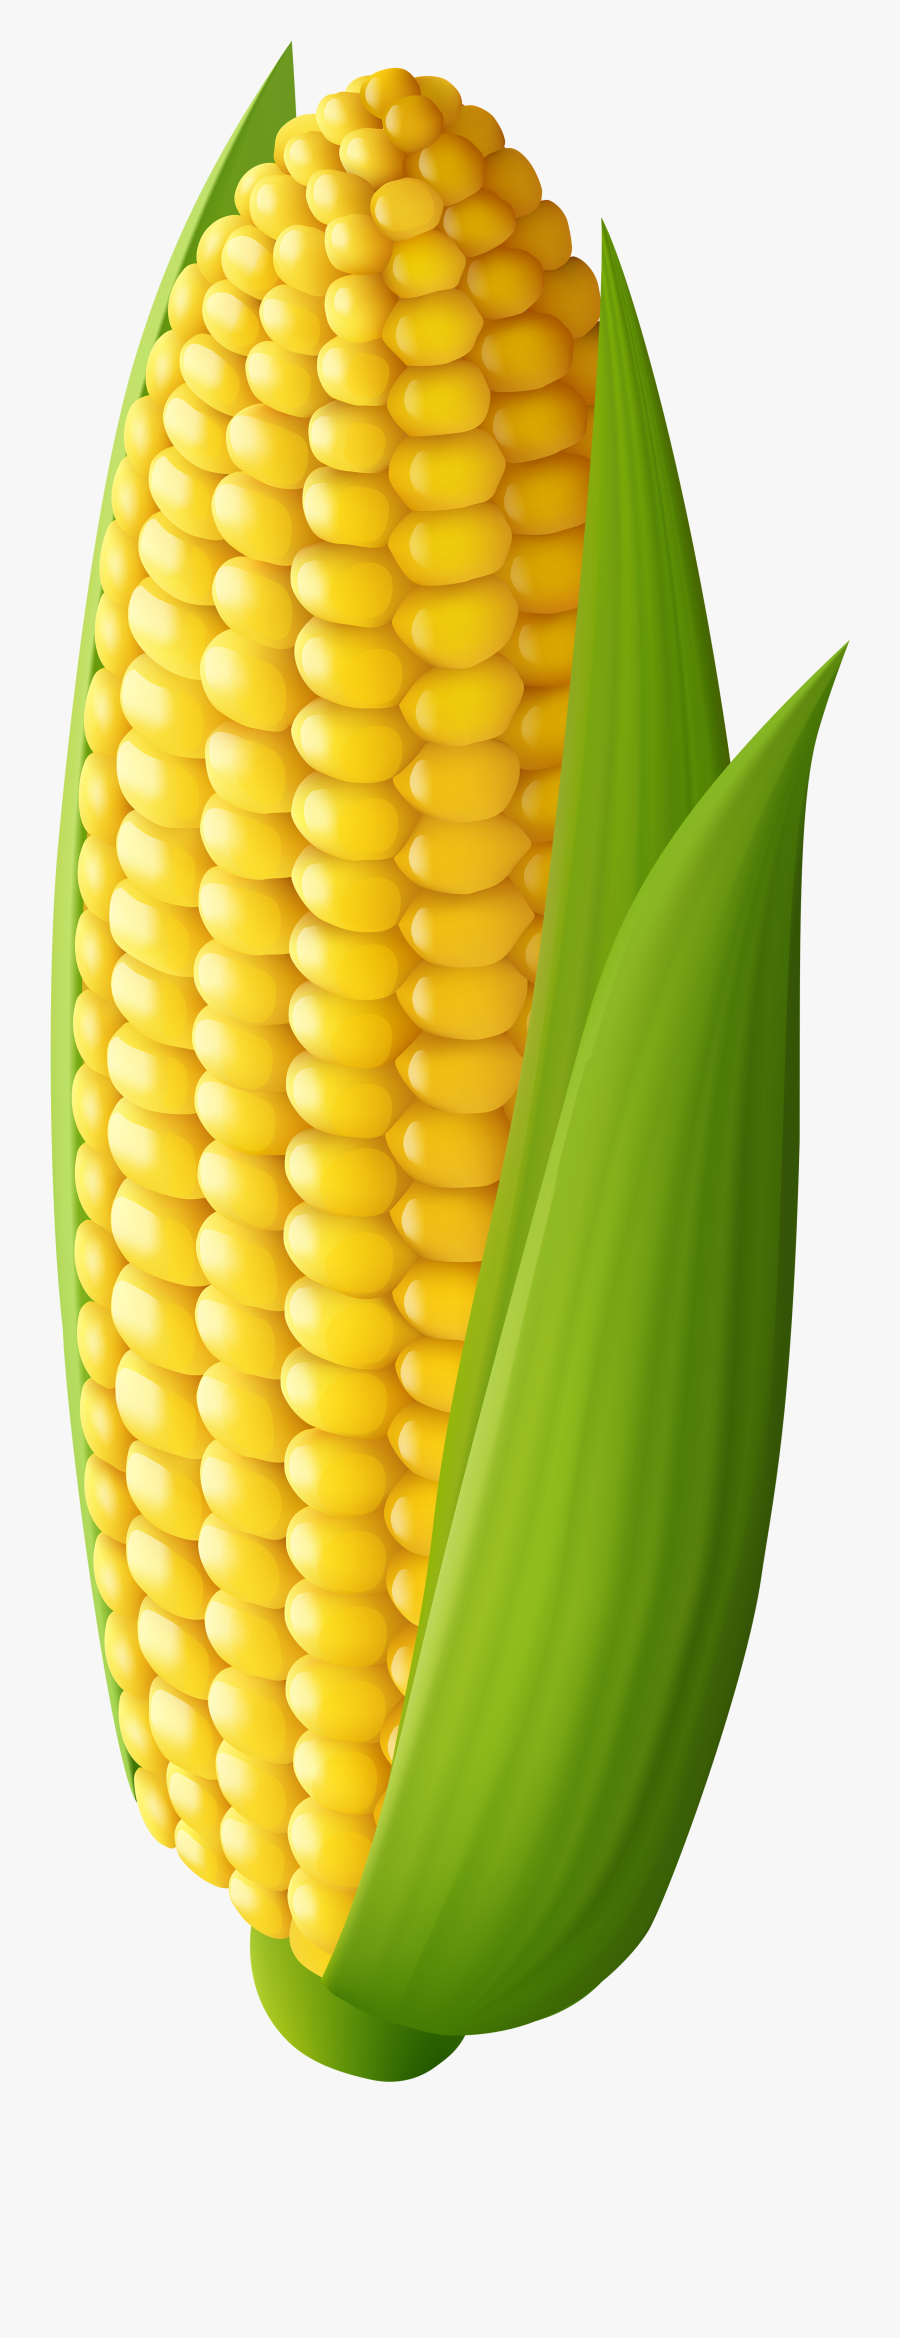 Corn Clipart Png - Transparent Background Corn Clipart, Transparent Clipart